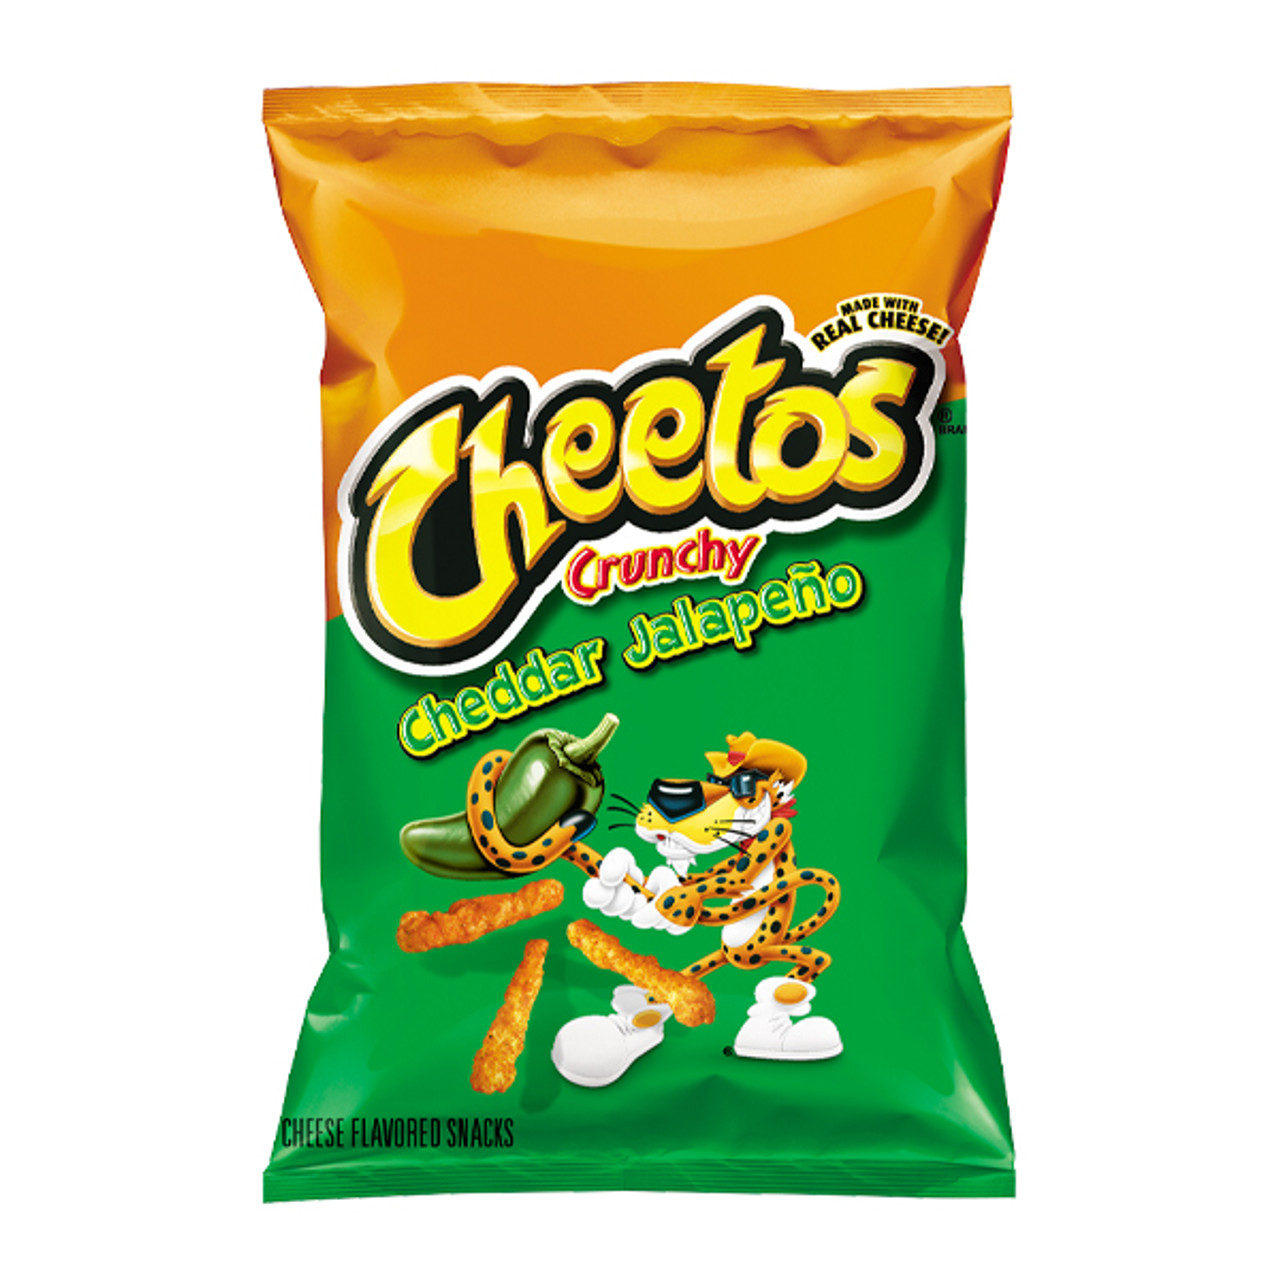 img/sortiment/Cheetos_Crunchy_Cheddar_Jalapenos__1.jpg